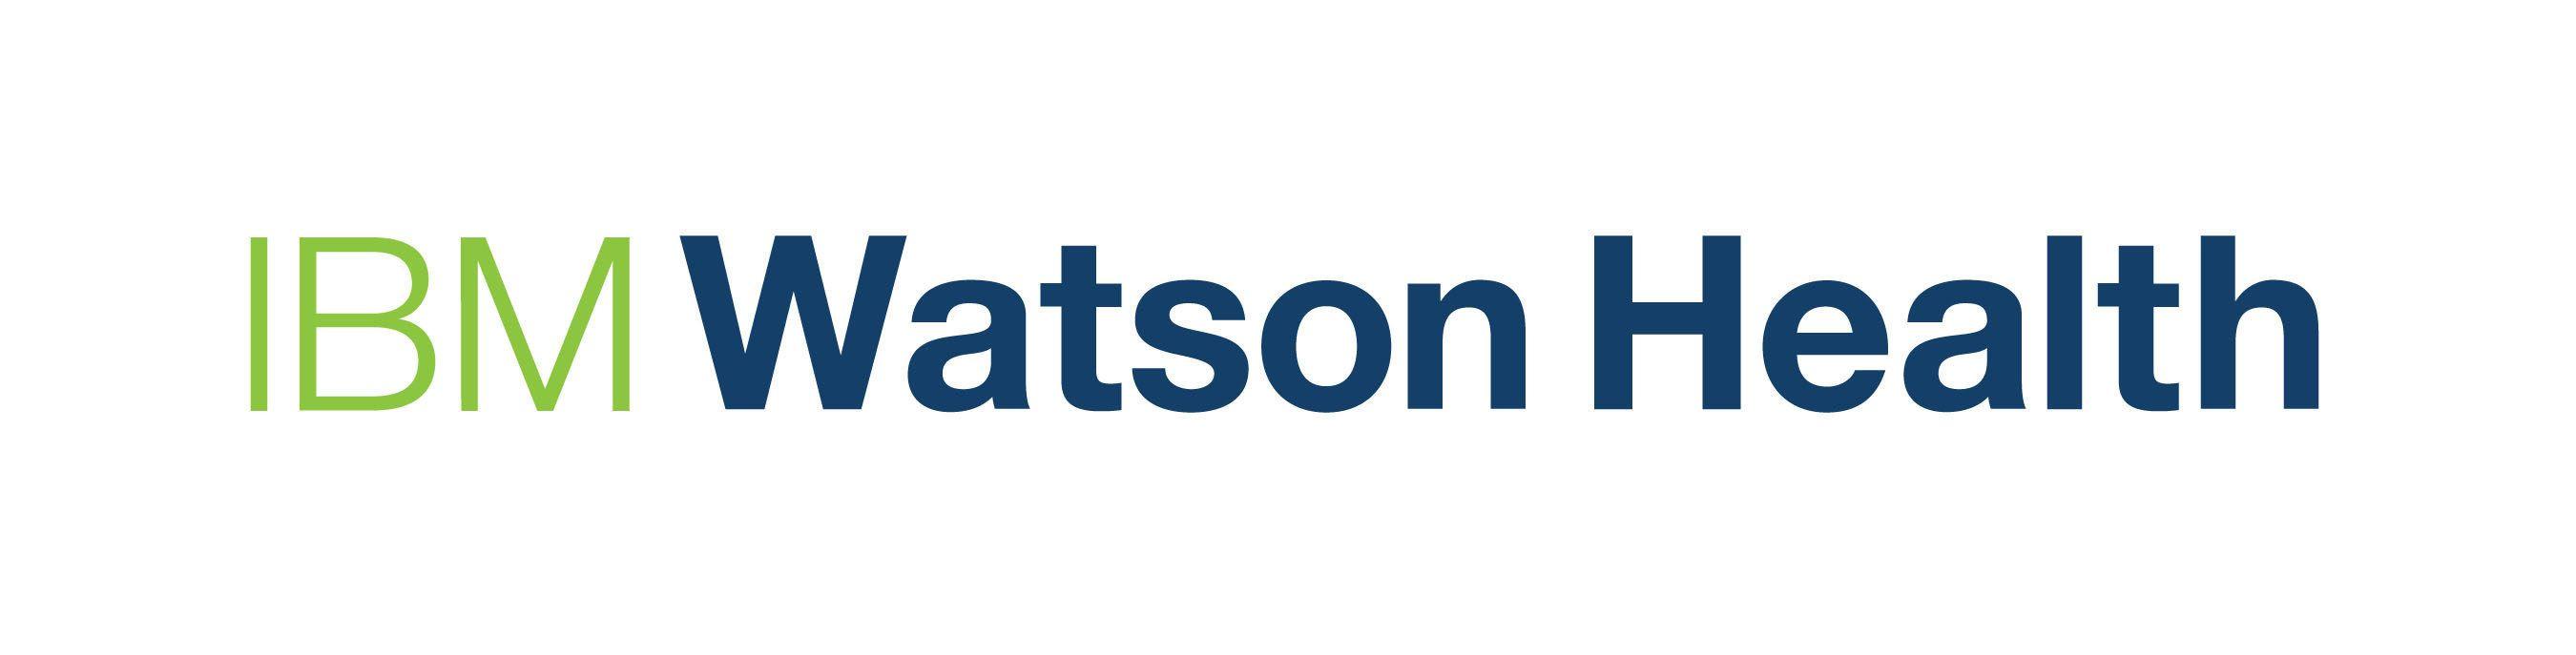 IBM Watson Logo - HealthPopuli.com